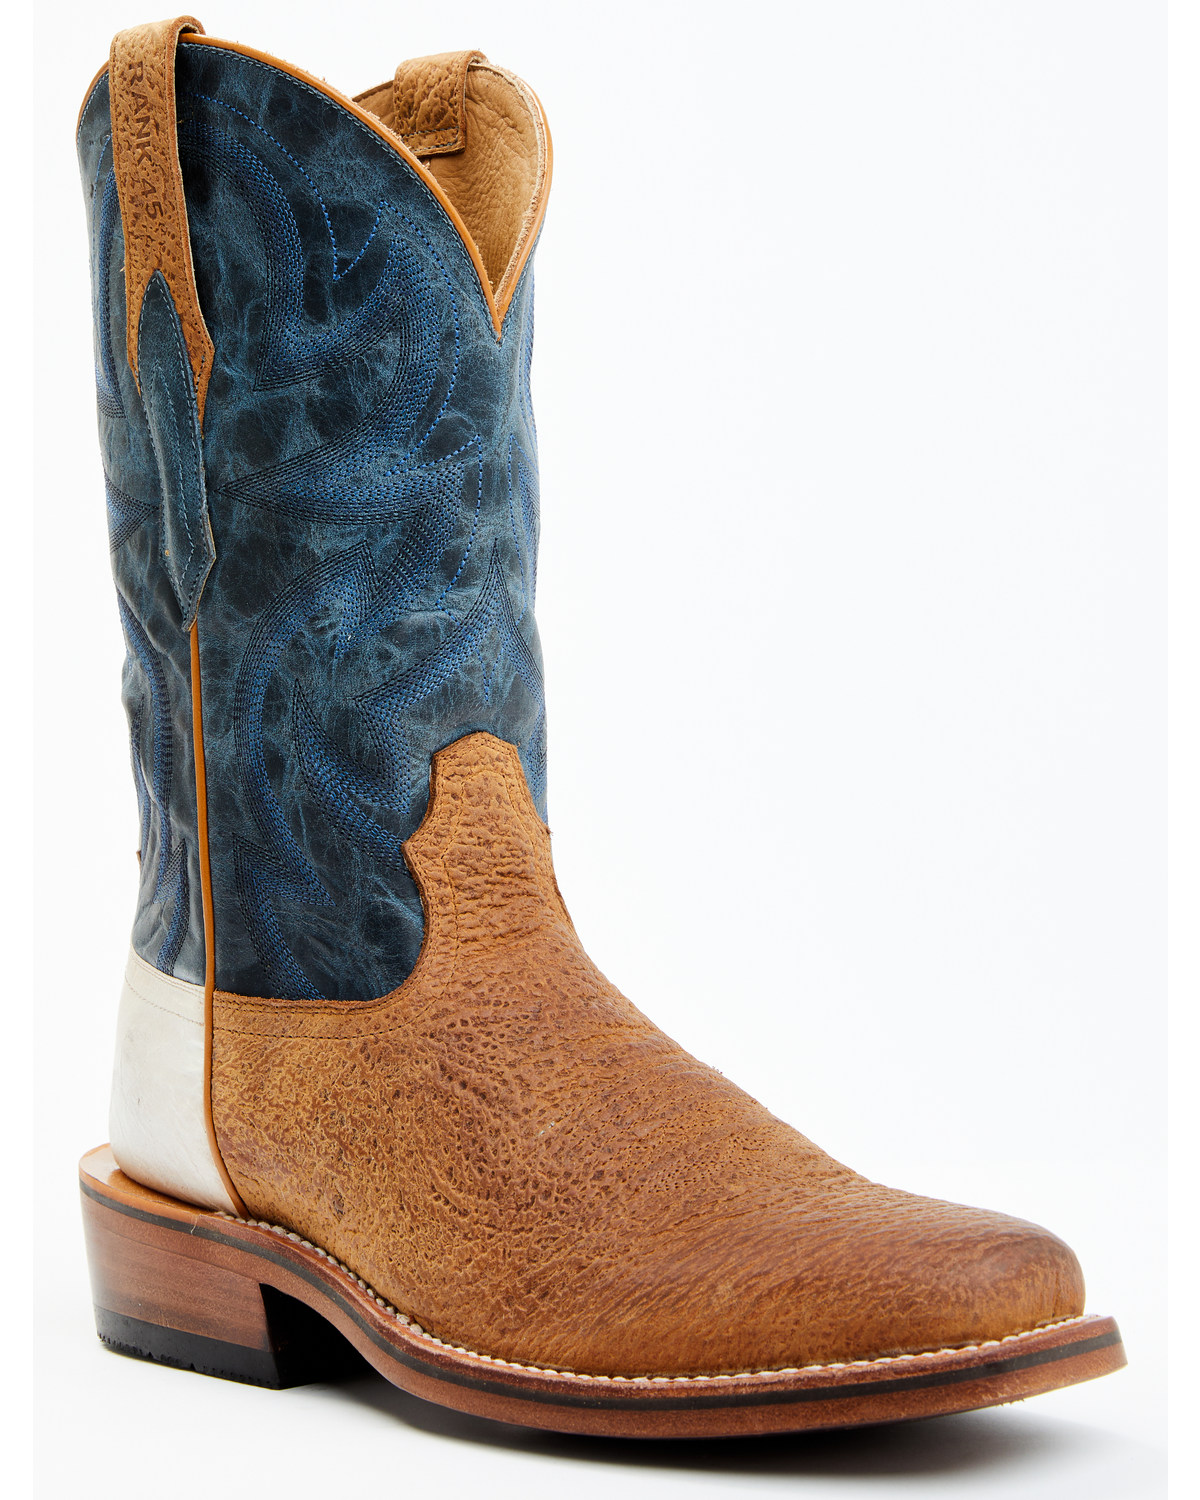 RANK 45® Men's Archer Western Boots - Square Toe